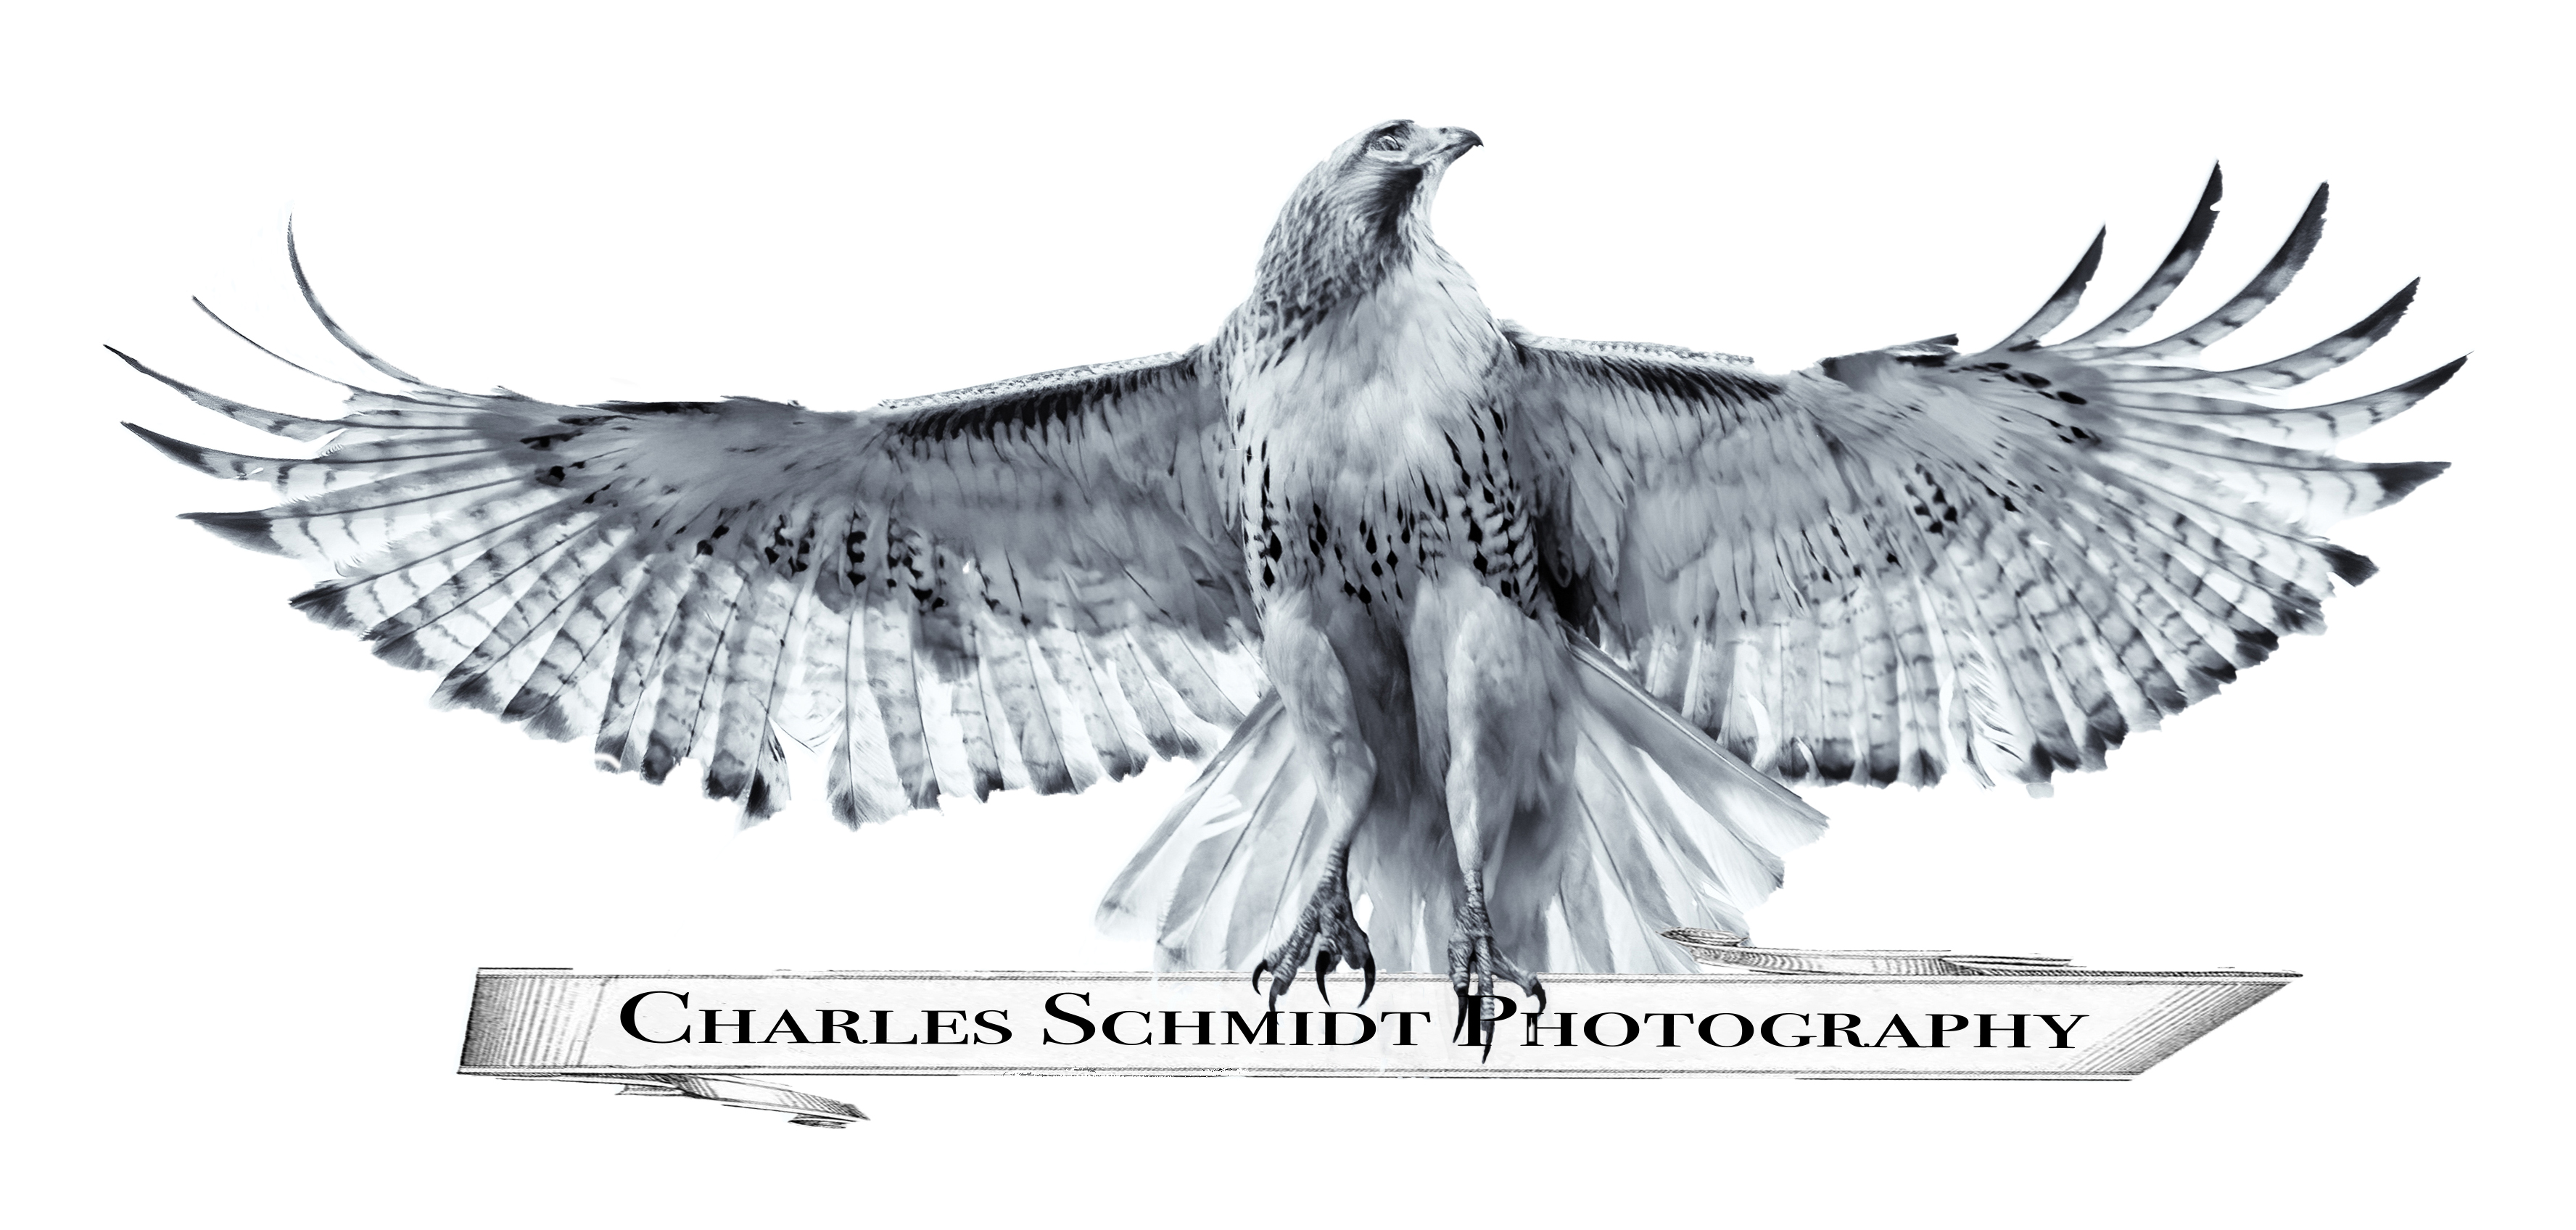 Charles Schmidt Photography